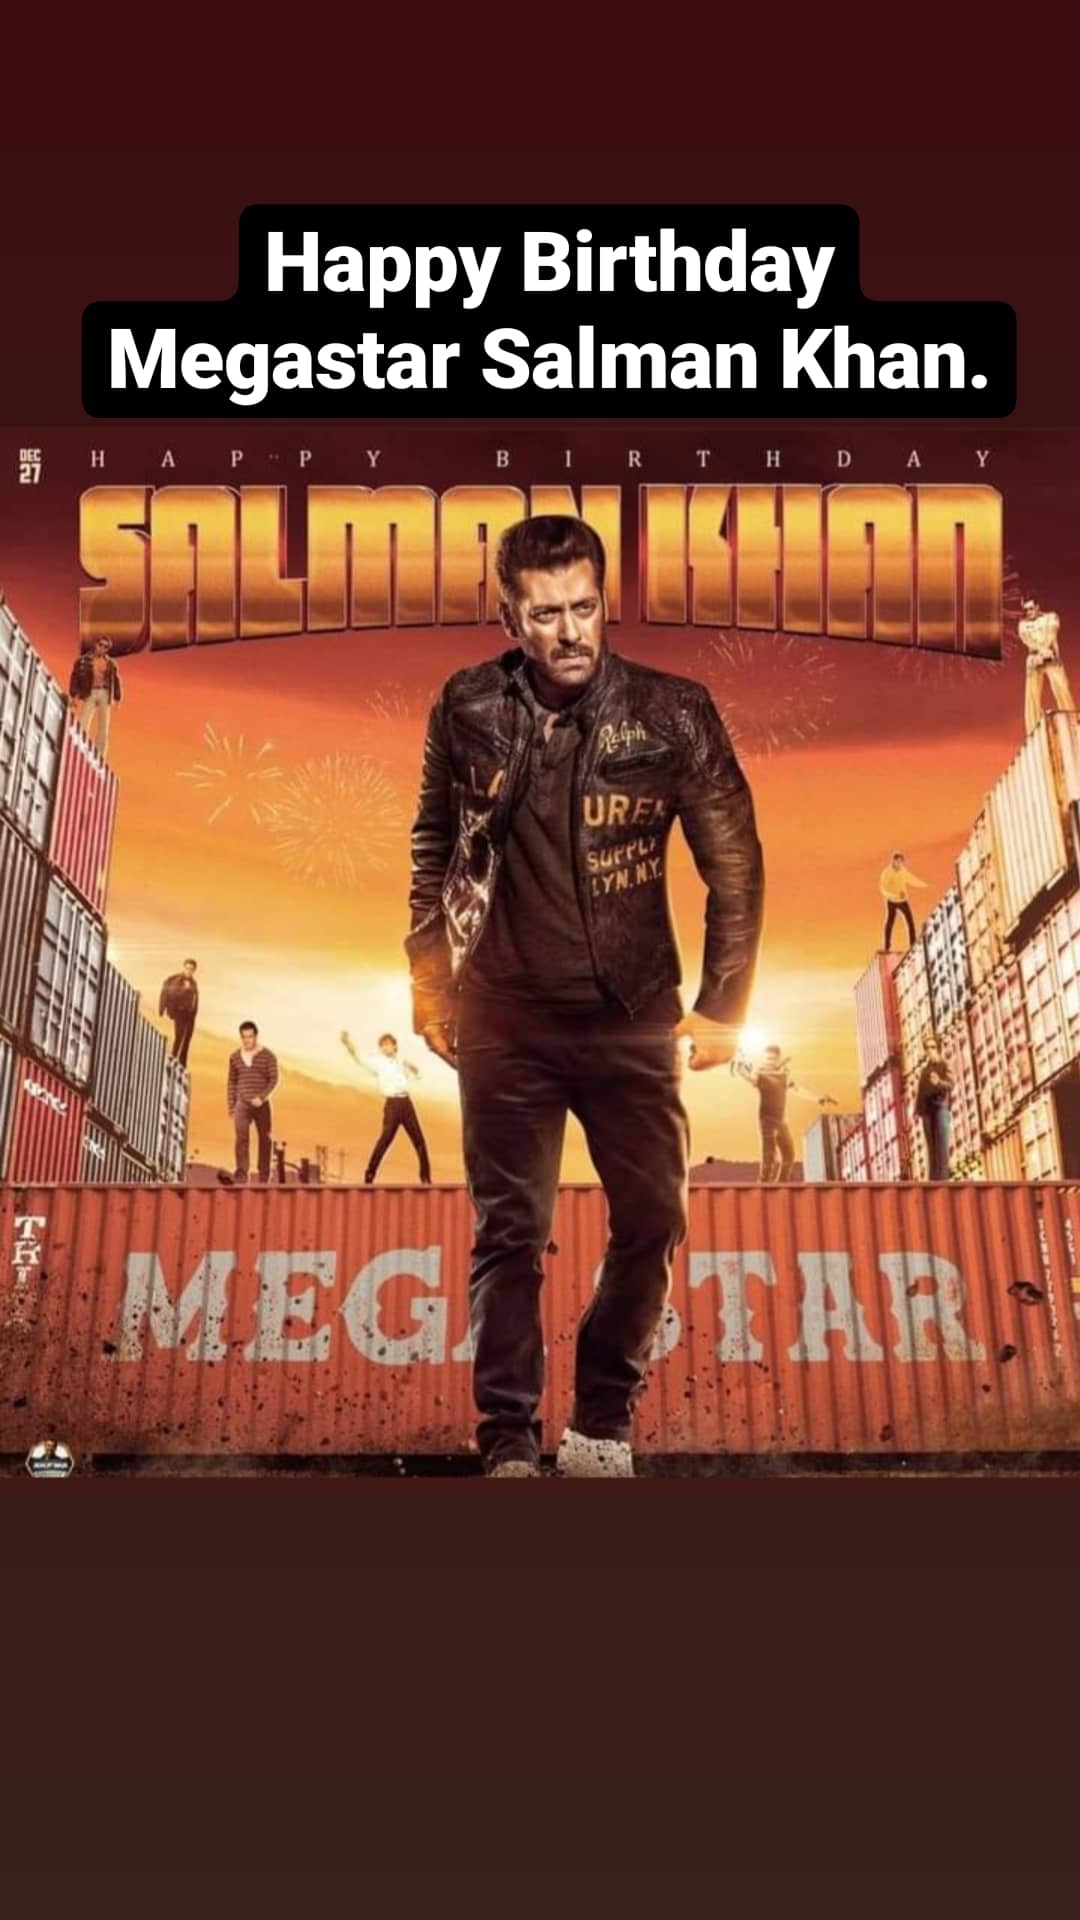  Happy 55th birthday to the Megastar Salman Khan . 